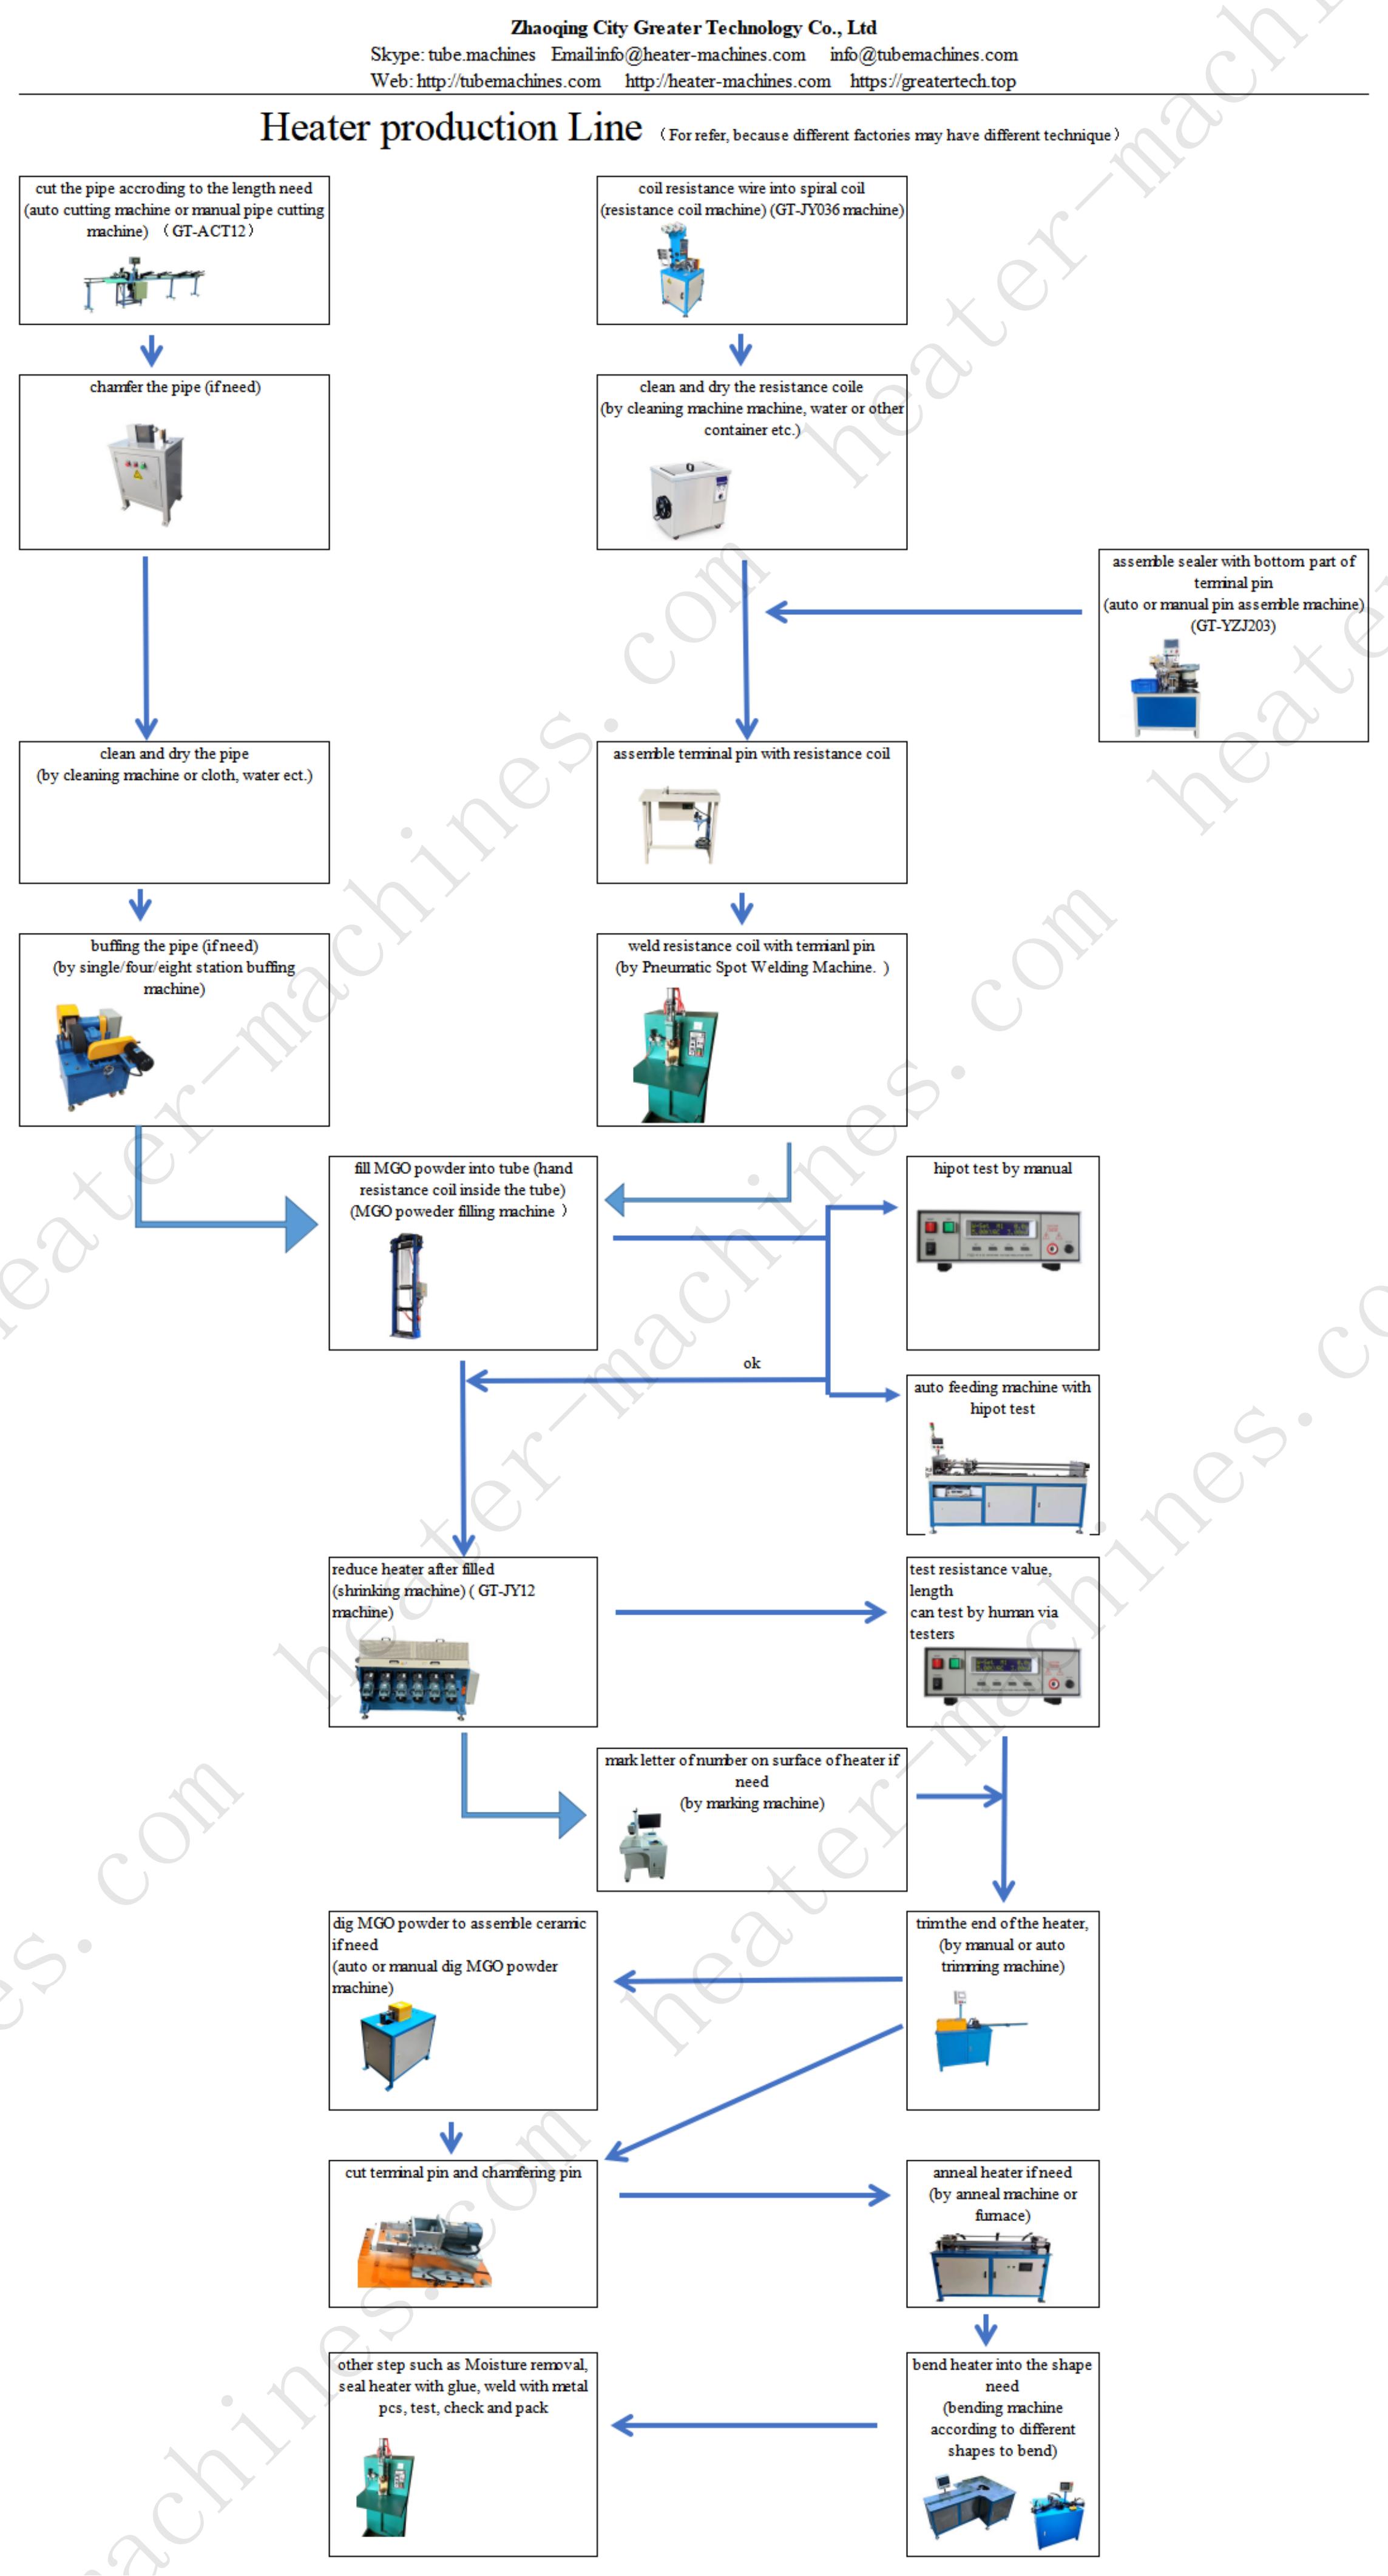 tubular heater produciton machines and steps